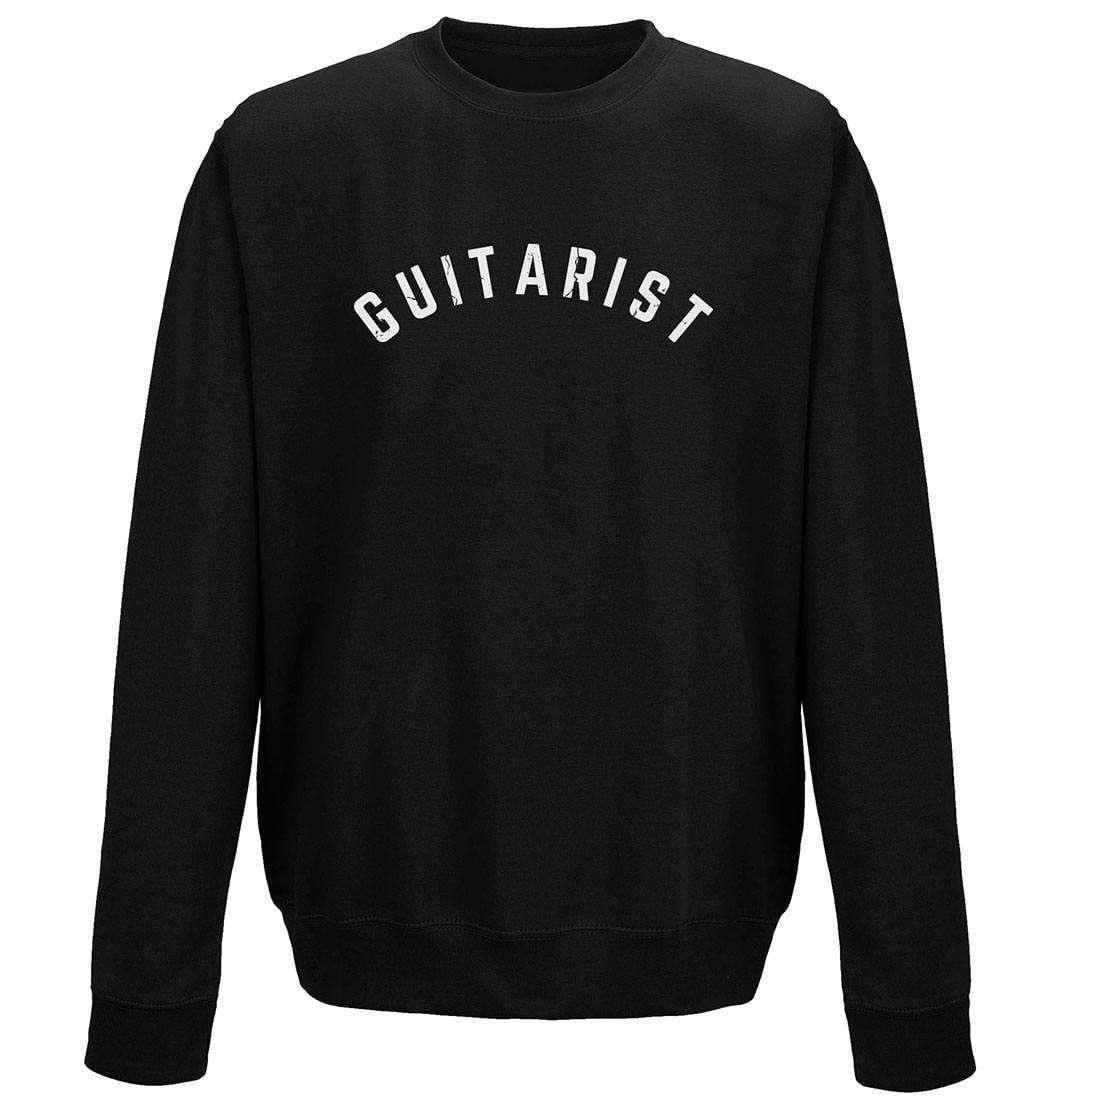 Guitarist Sweatshirt For Men and Women 8Ball